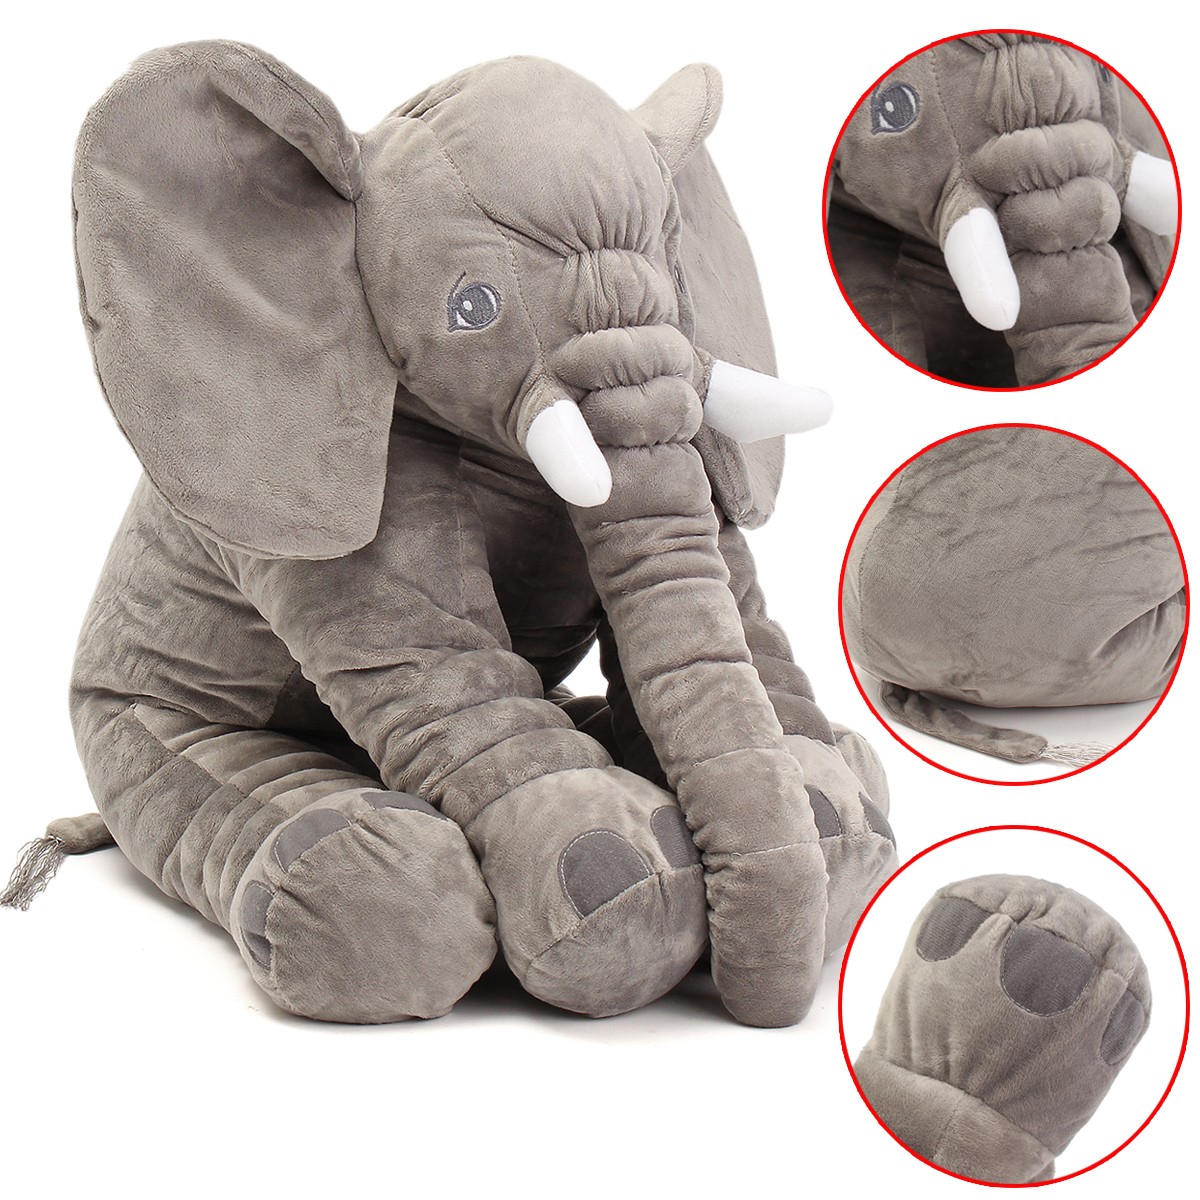 235quot-60cm-Cute-Jumbo-Elephant-Plush-Doll-Stuffed-Animal-Soft-Kids-Toy-Gift-1107307-6